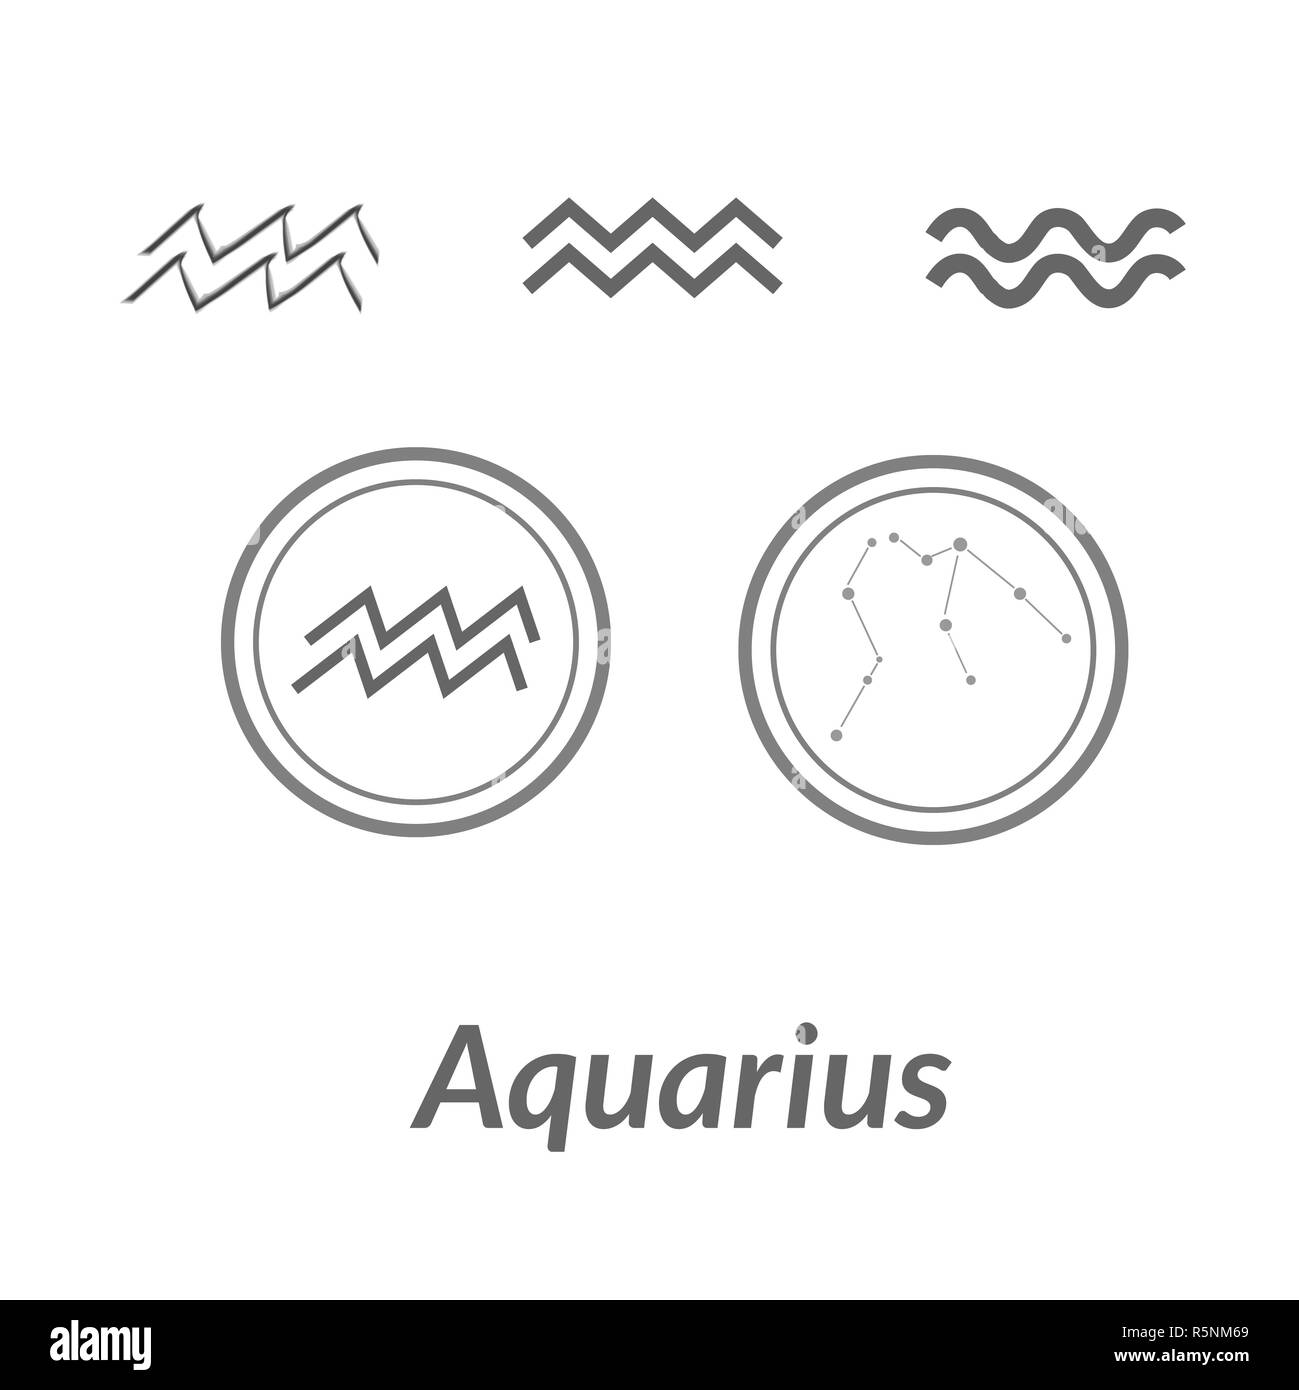 The Water-Bearer aquarius sing. Star constellation vector element. Age of aquarius constellation zodiac symbol on light background. Stock Photo